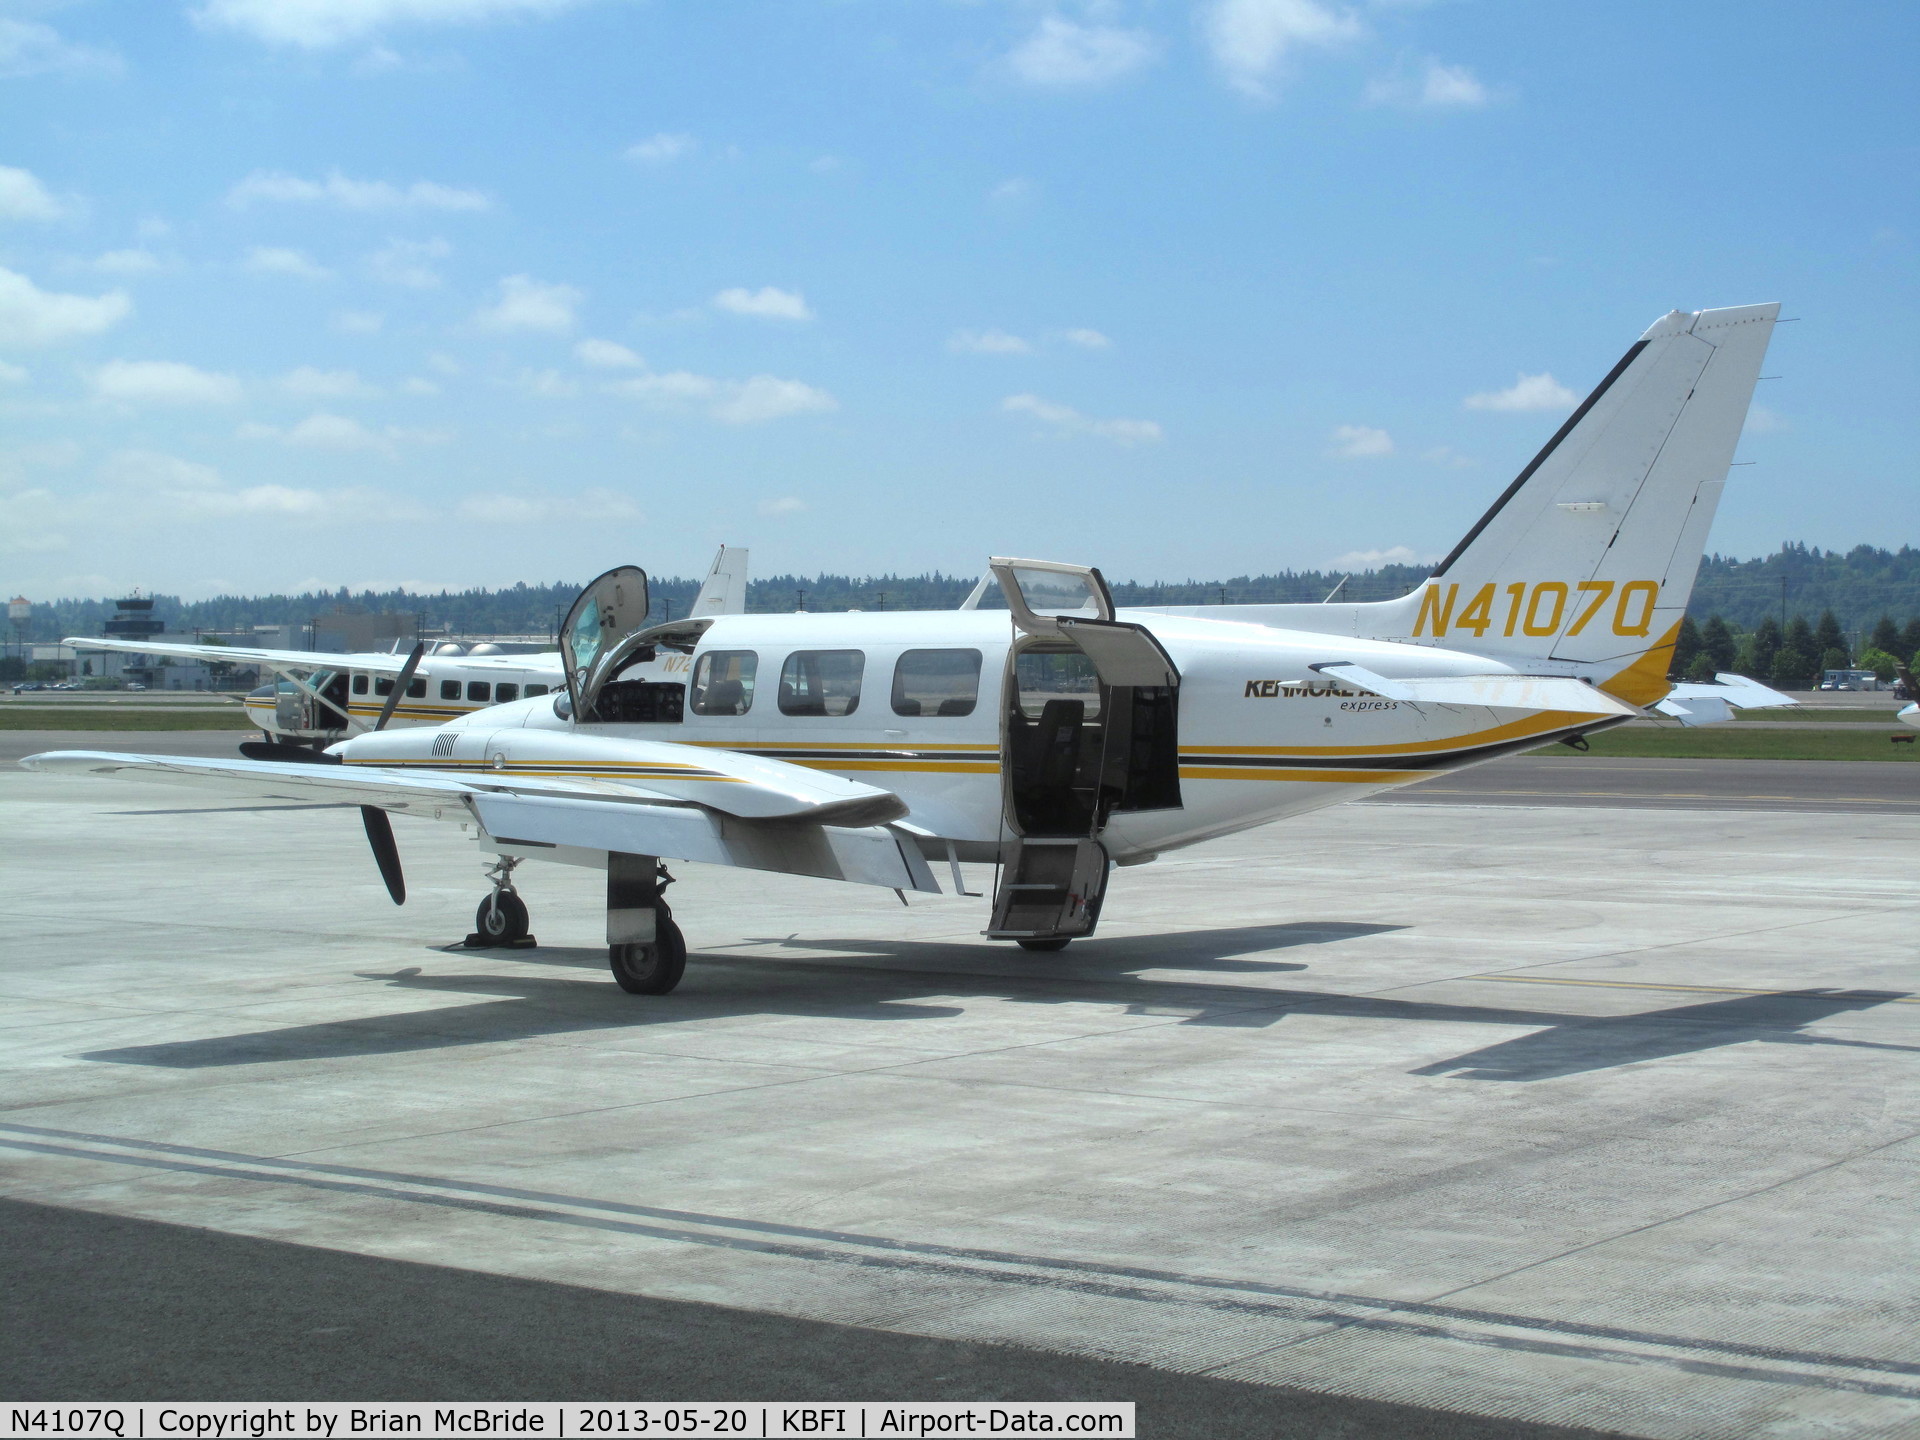 N4107Q, 1982 Piper PA-31-350 Chieftain C/N 31-8253008, Kenmore Air. Piper PA-31-350 Chieftain. N4107Q cn 31-8253008. Seattle - Boeing Field King County International (BFI KBFI). Image © Brian McBride. 20 May 2013